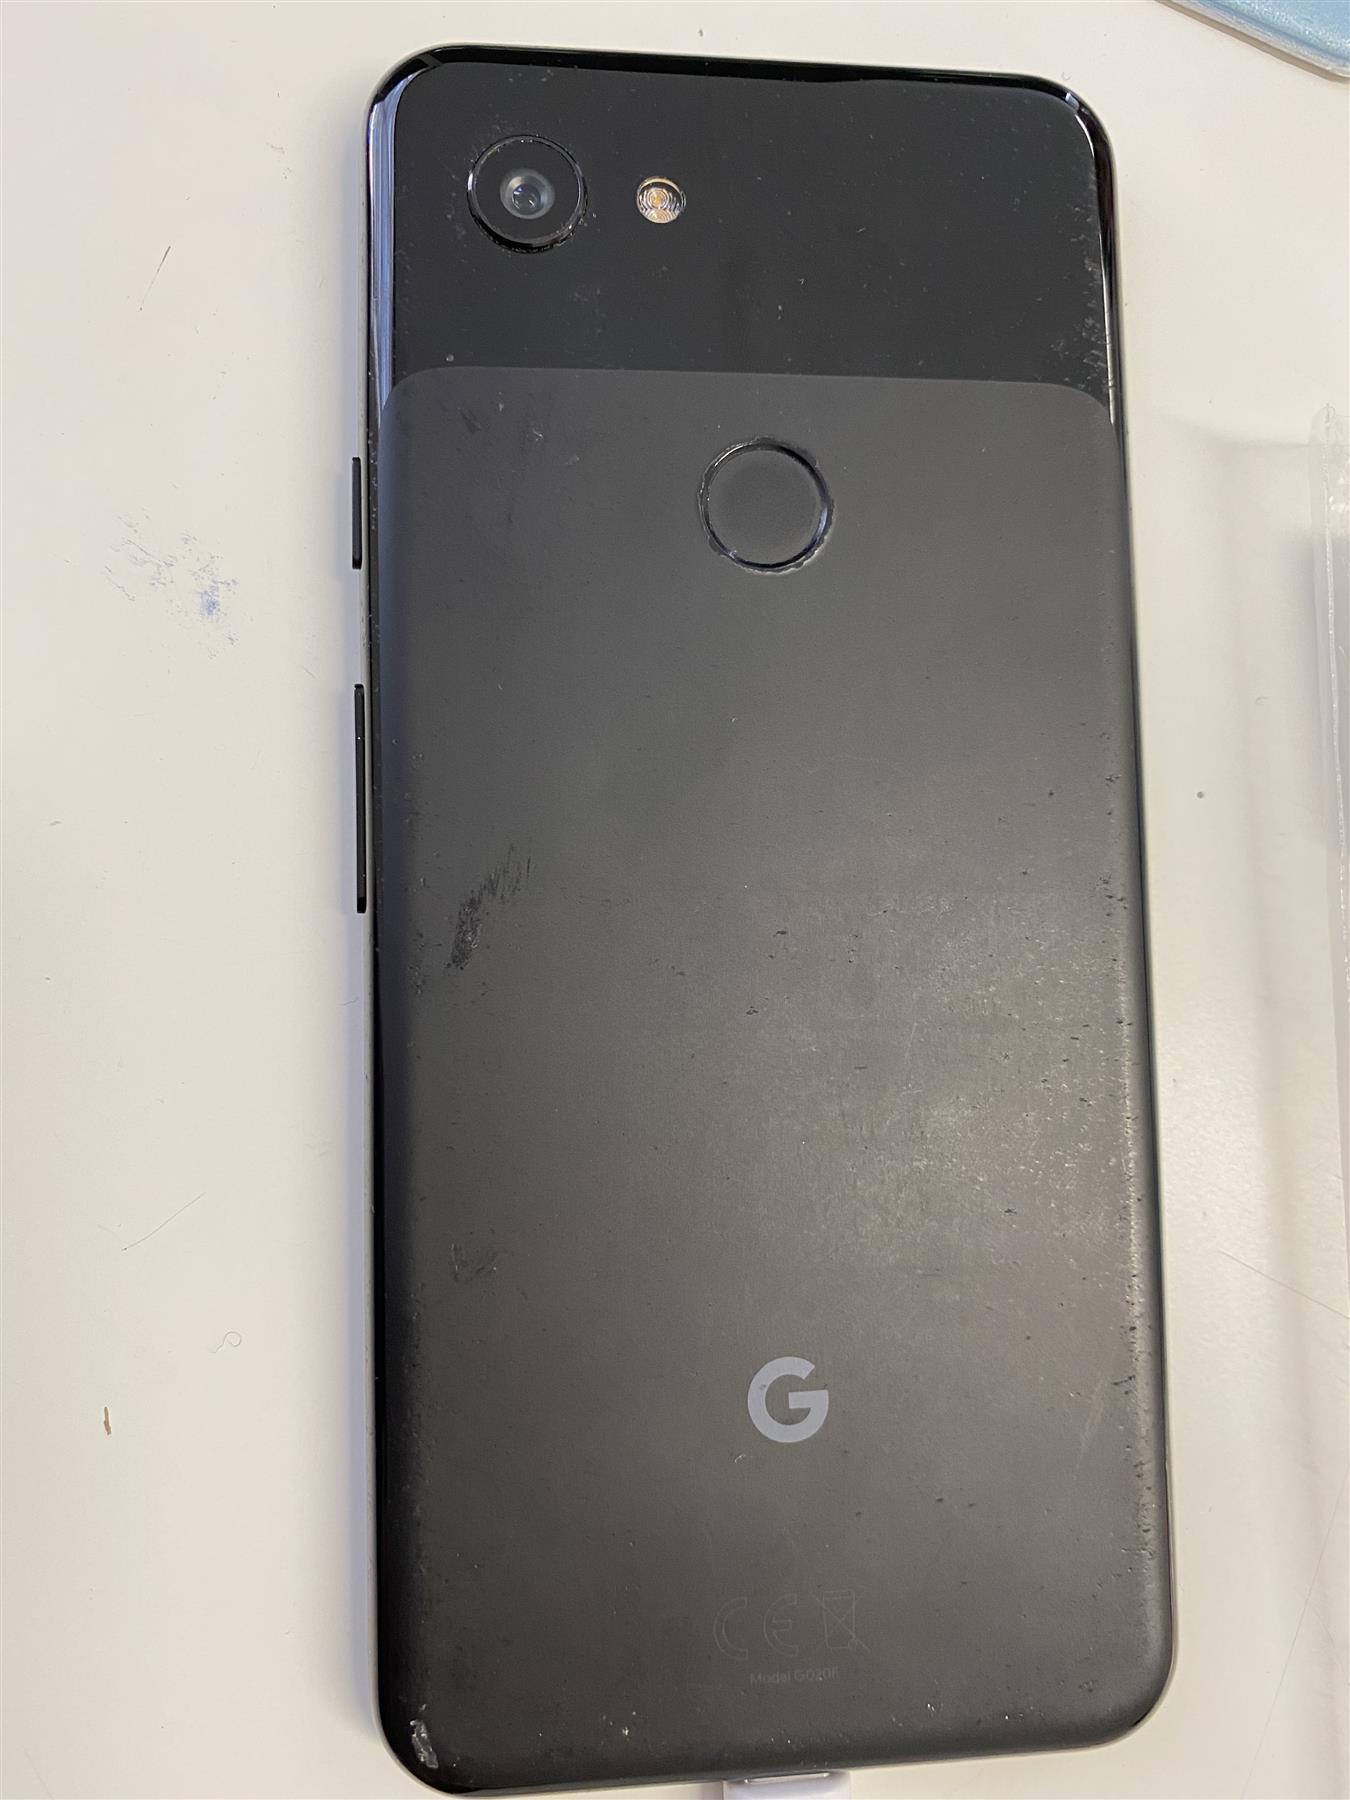 Google Pixel 3a 64GB Just Black Unlocked - Used